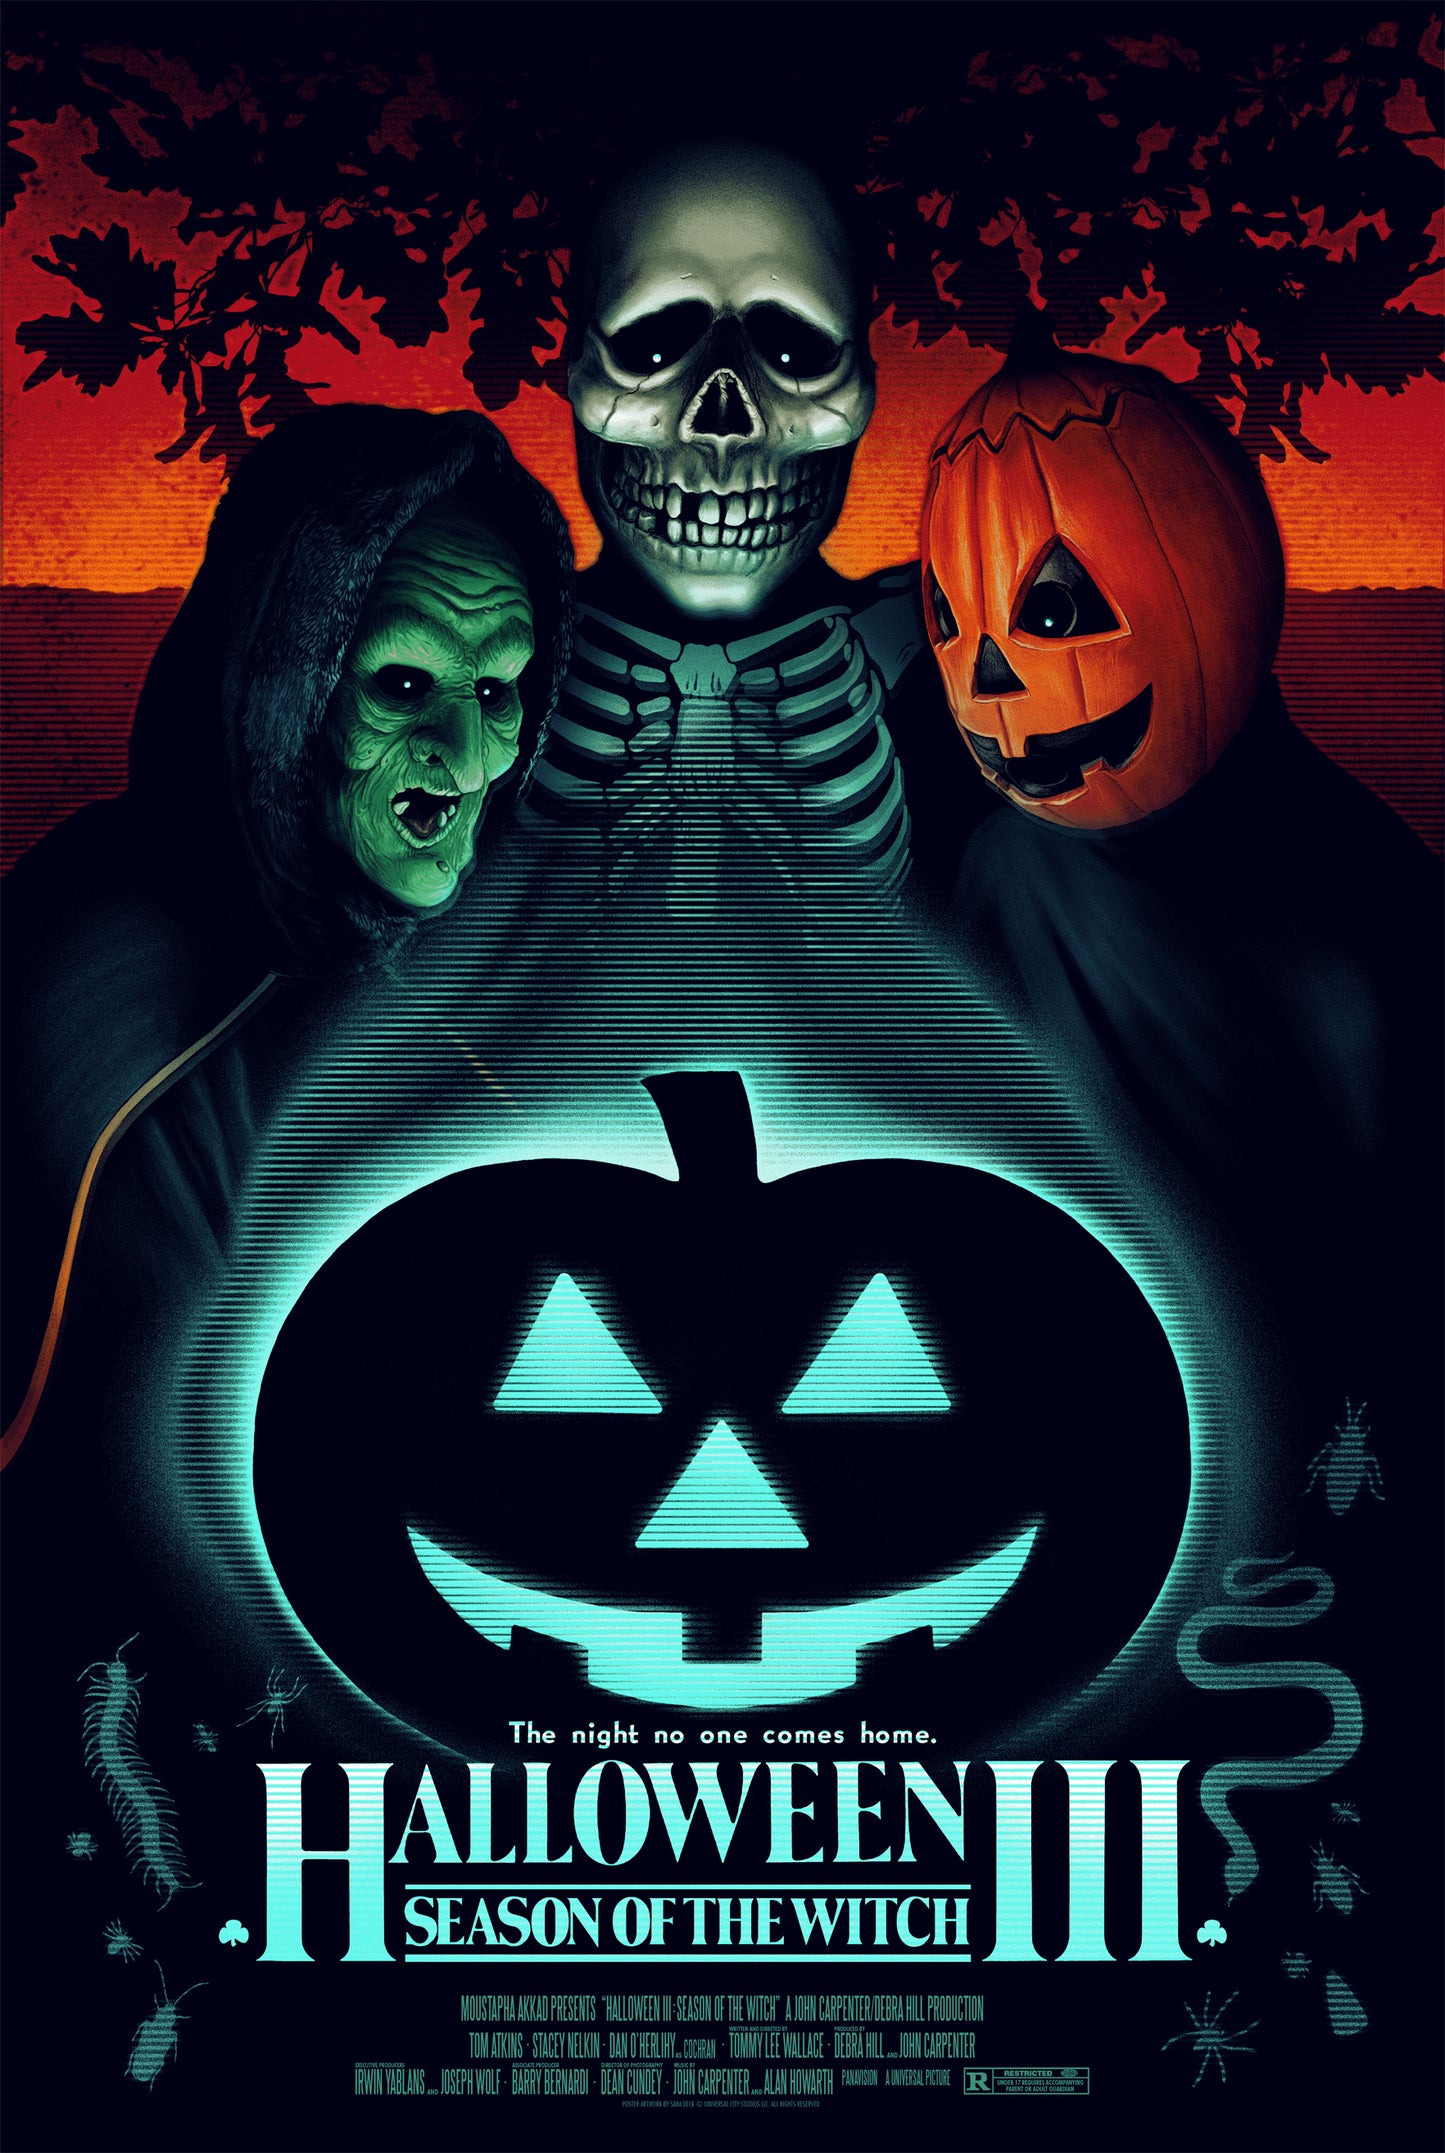 Sara Deck "Halloween III: Season of the Witch"